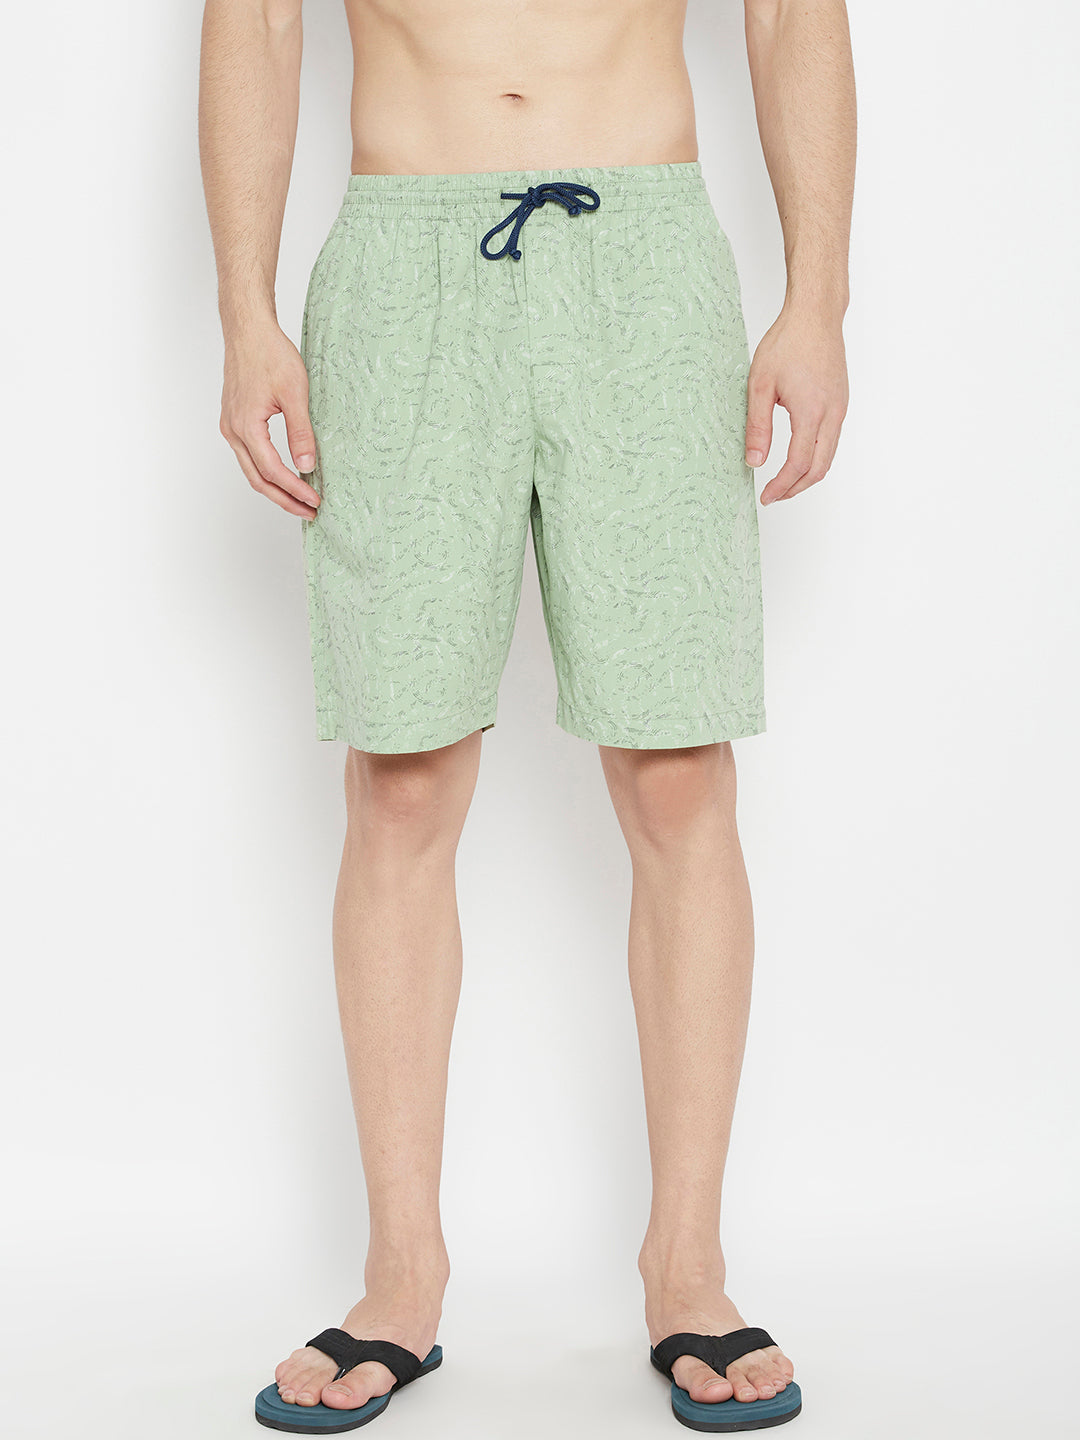 Mint Green Printed Slim Fit Lounge Shorts - Men Lounge Shorts